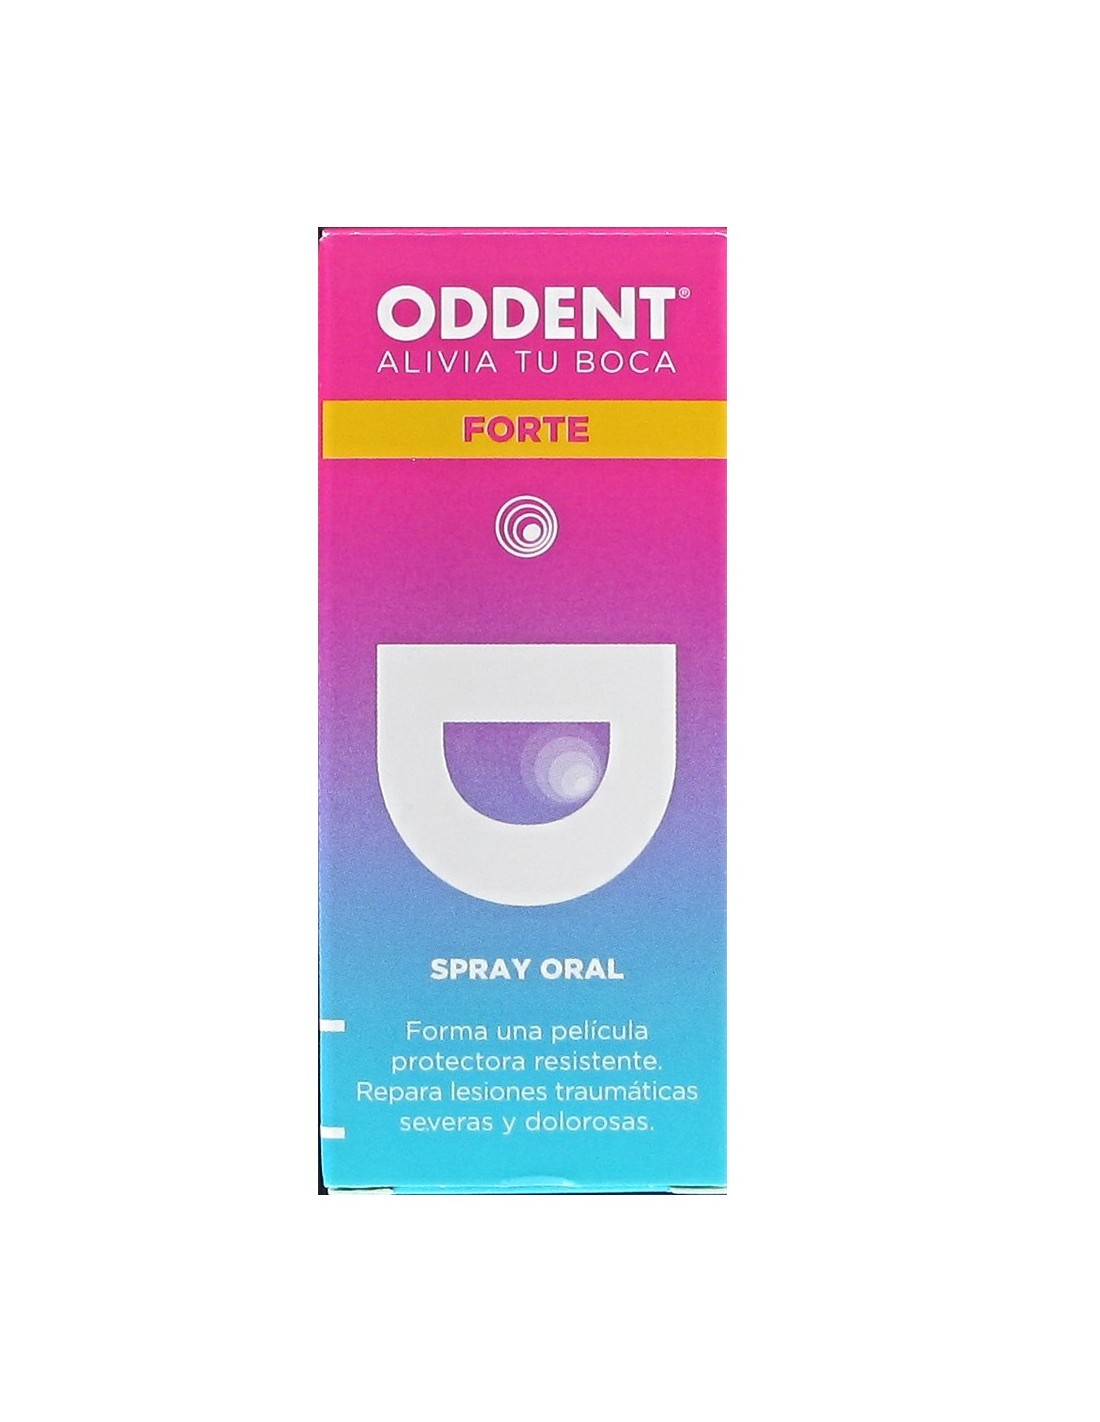 Farmacia Fuentelucha  Oddent spray oral forte 20 ml